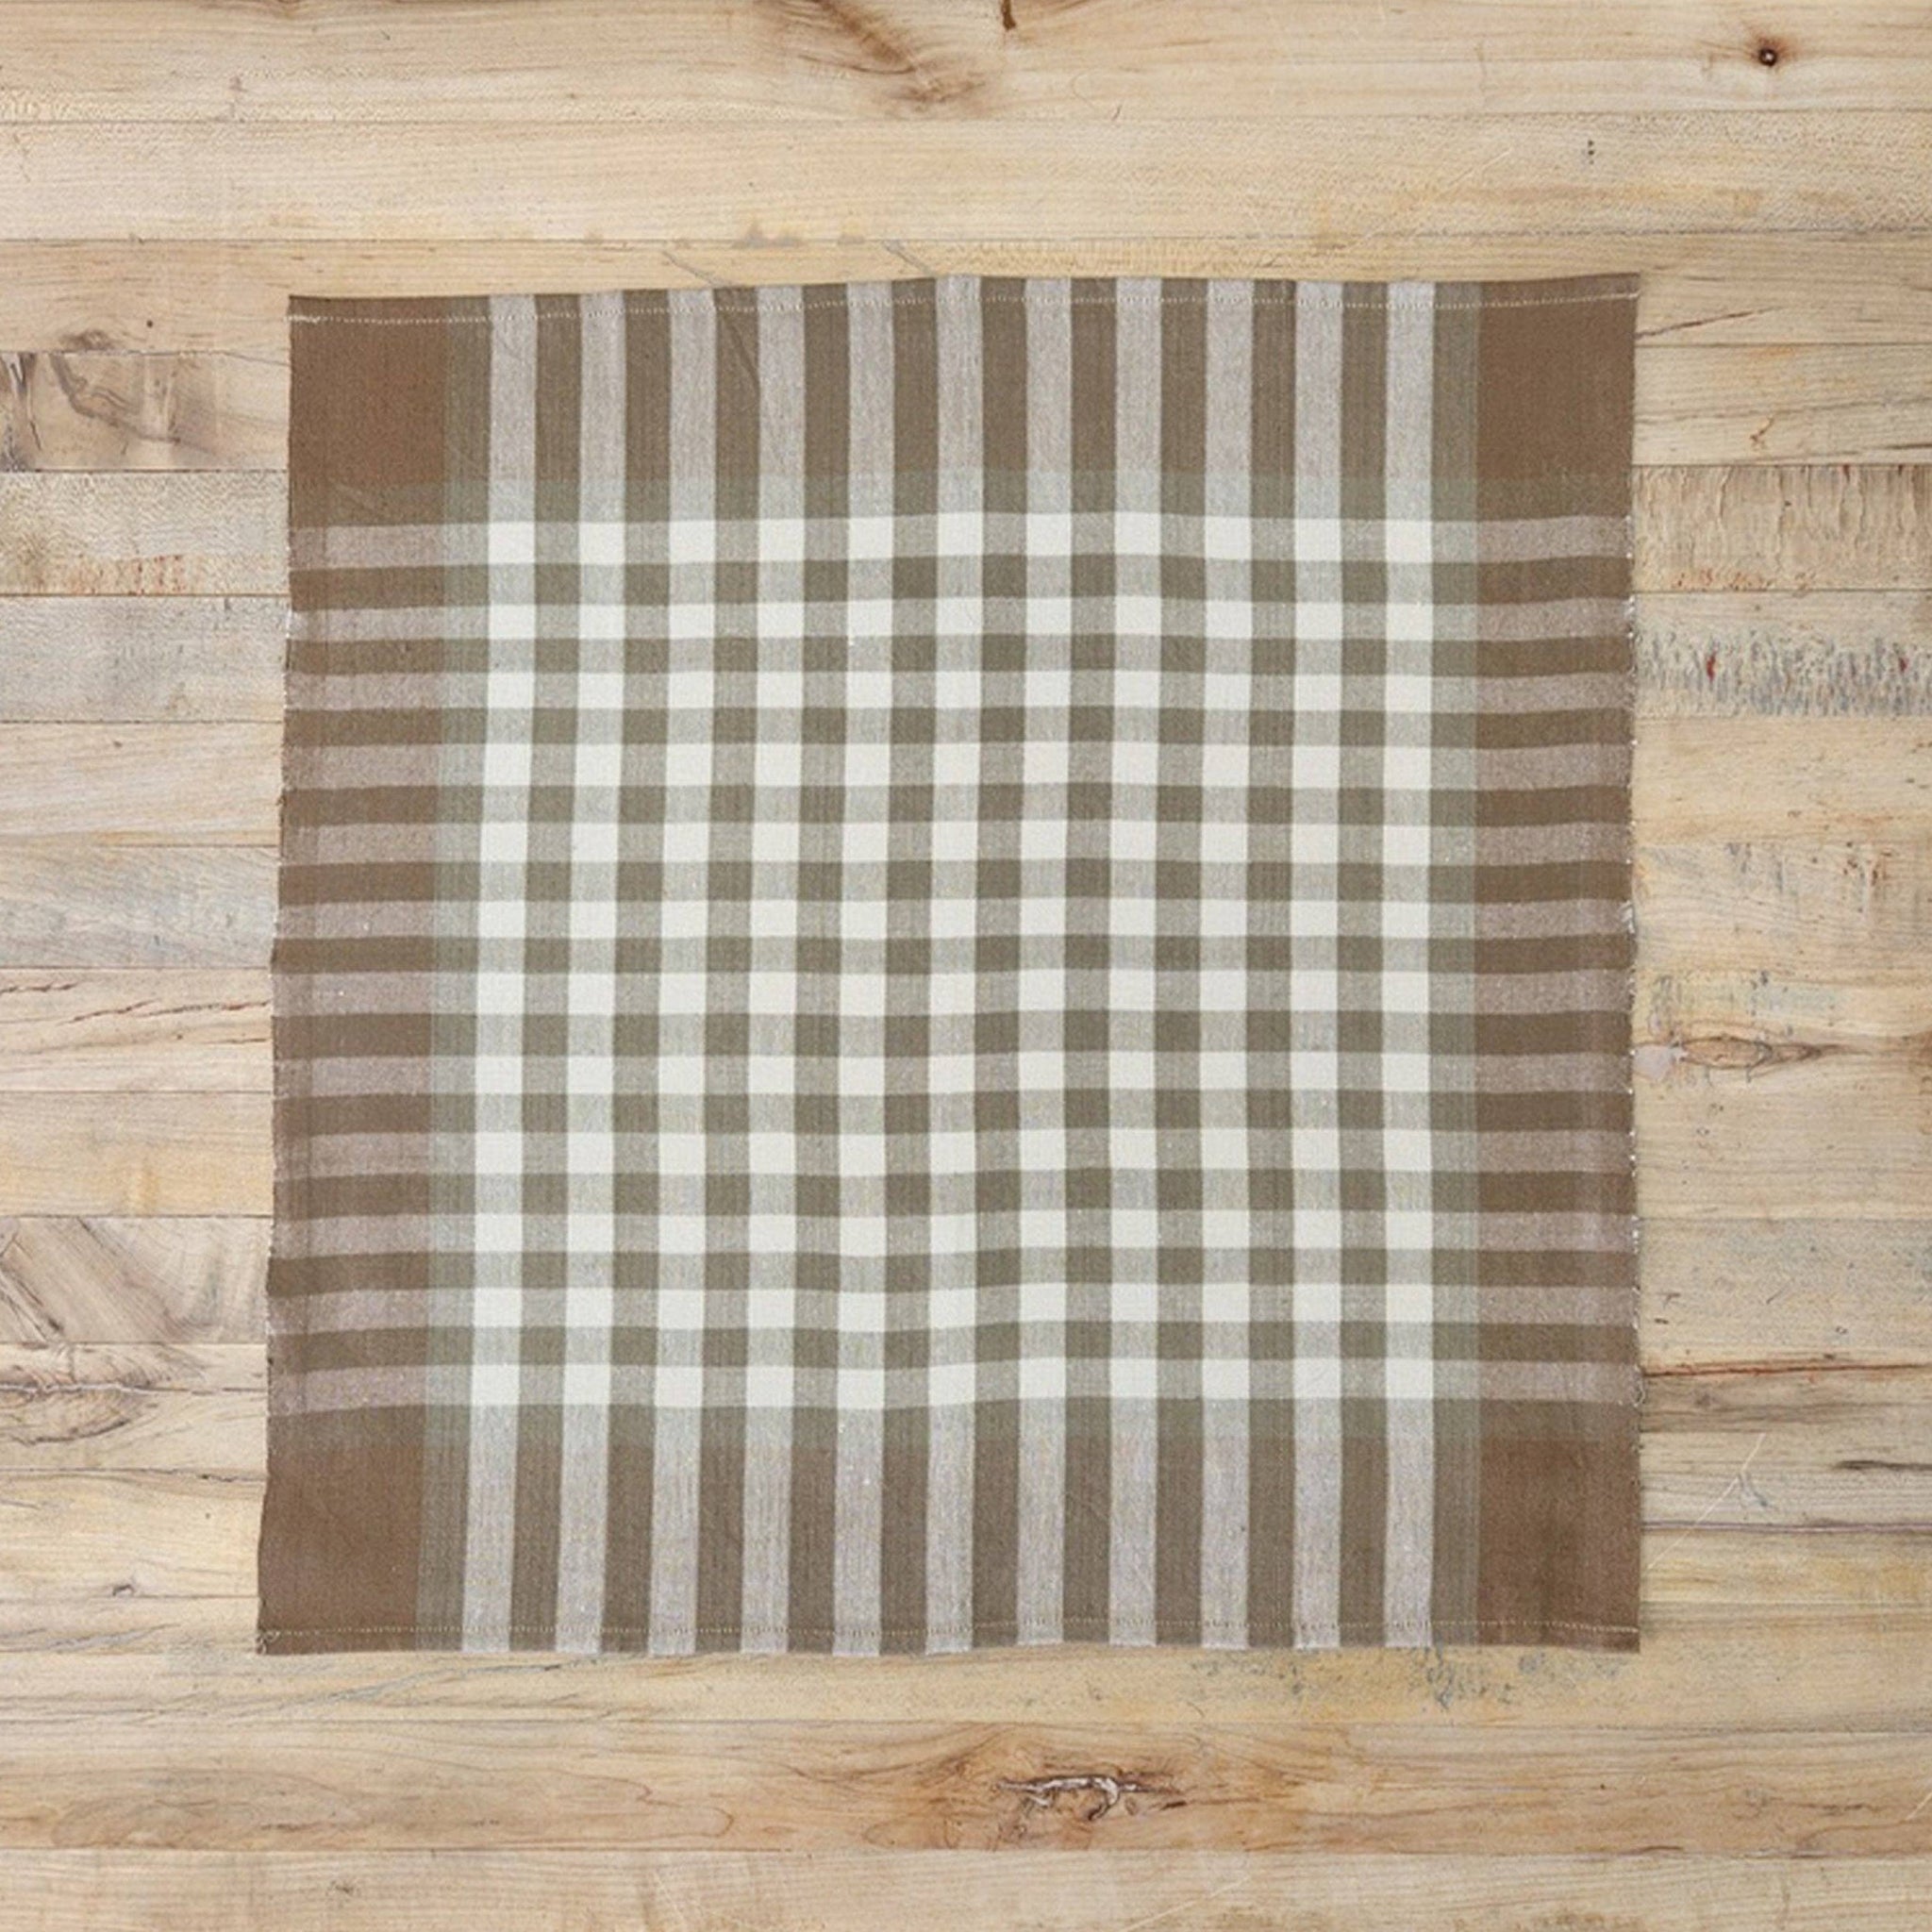 Grid Cotton Napkins (Set of 2)